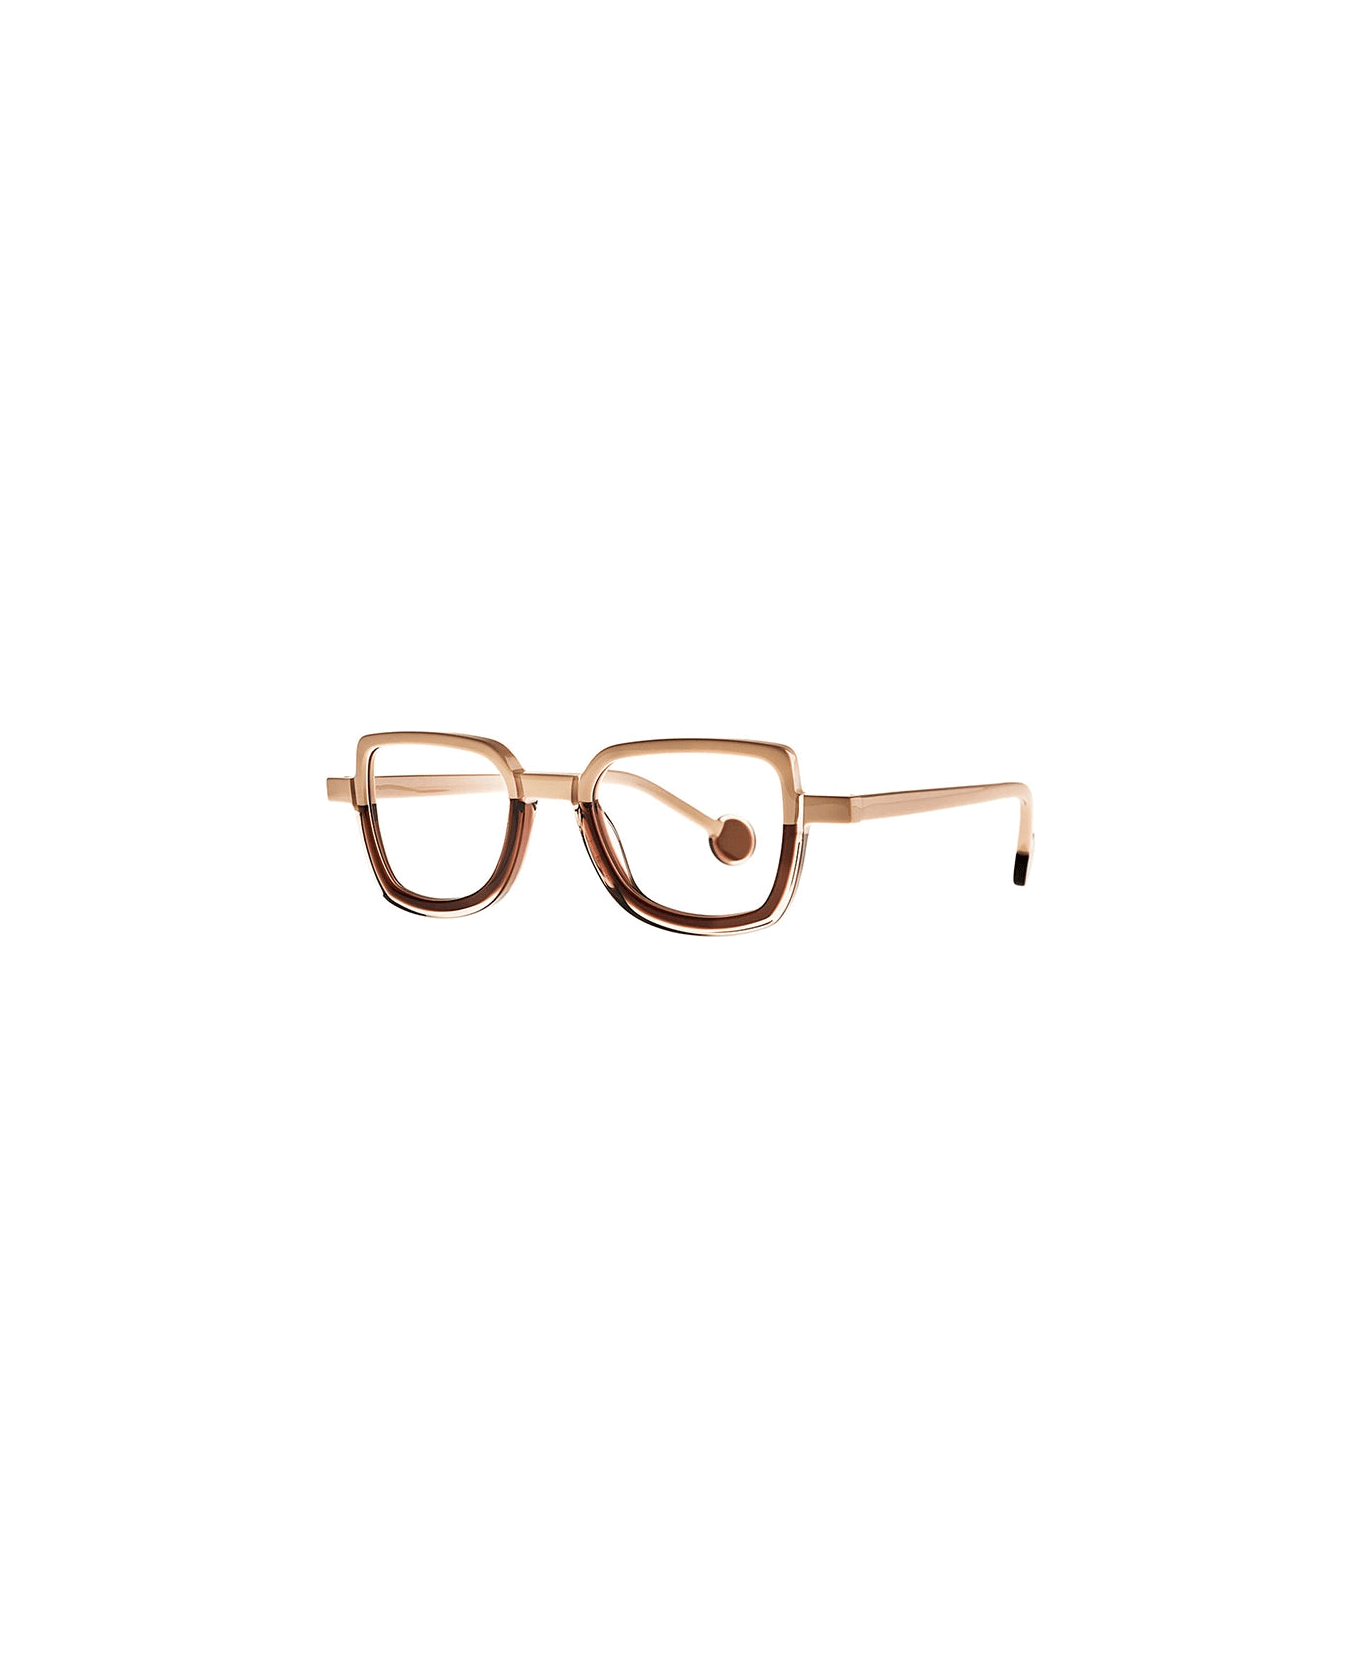 Theo Eyewear Schommel - 11 Glasses - ivory/brown